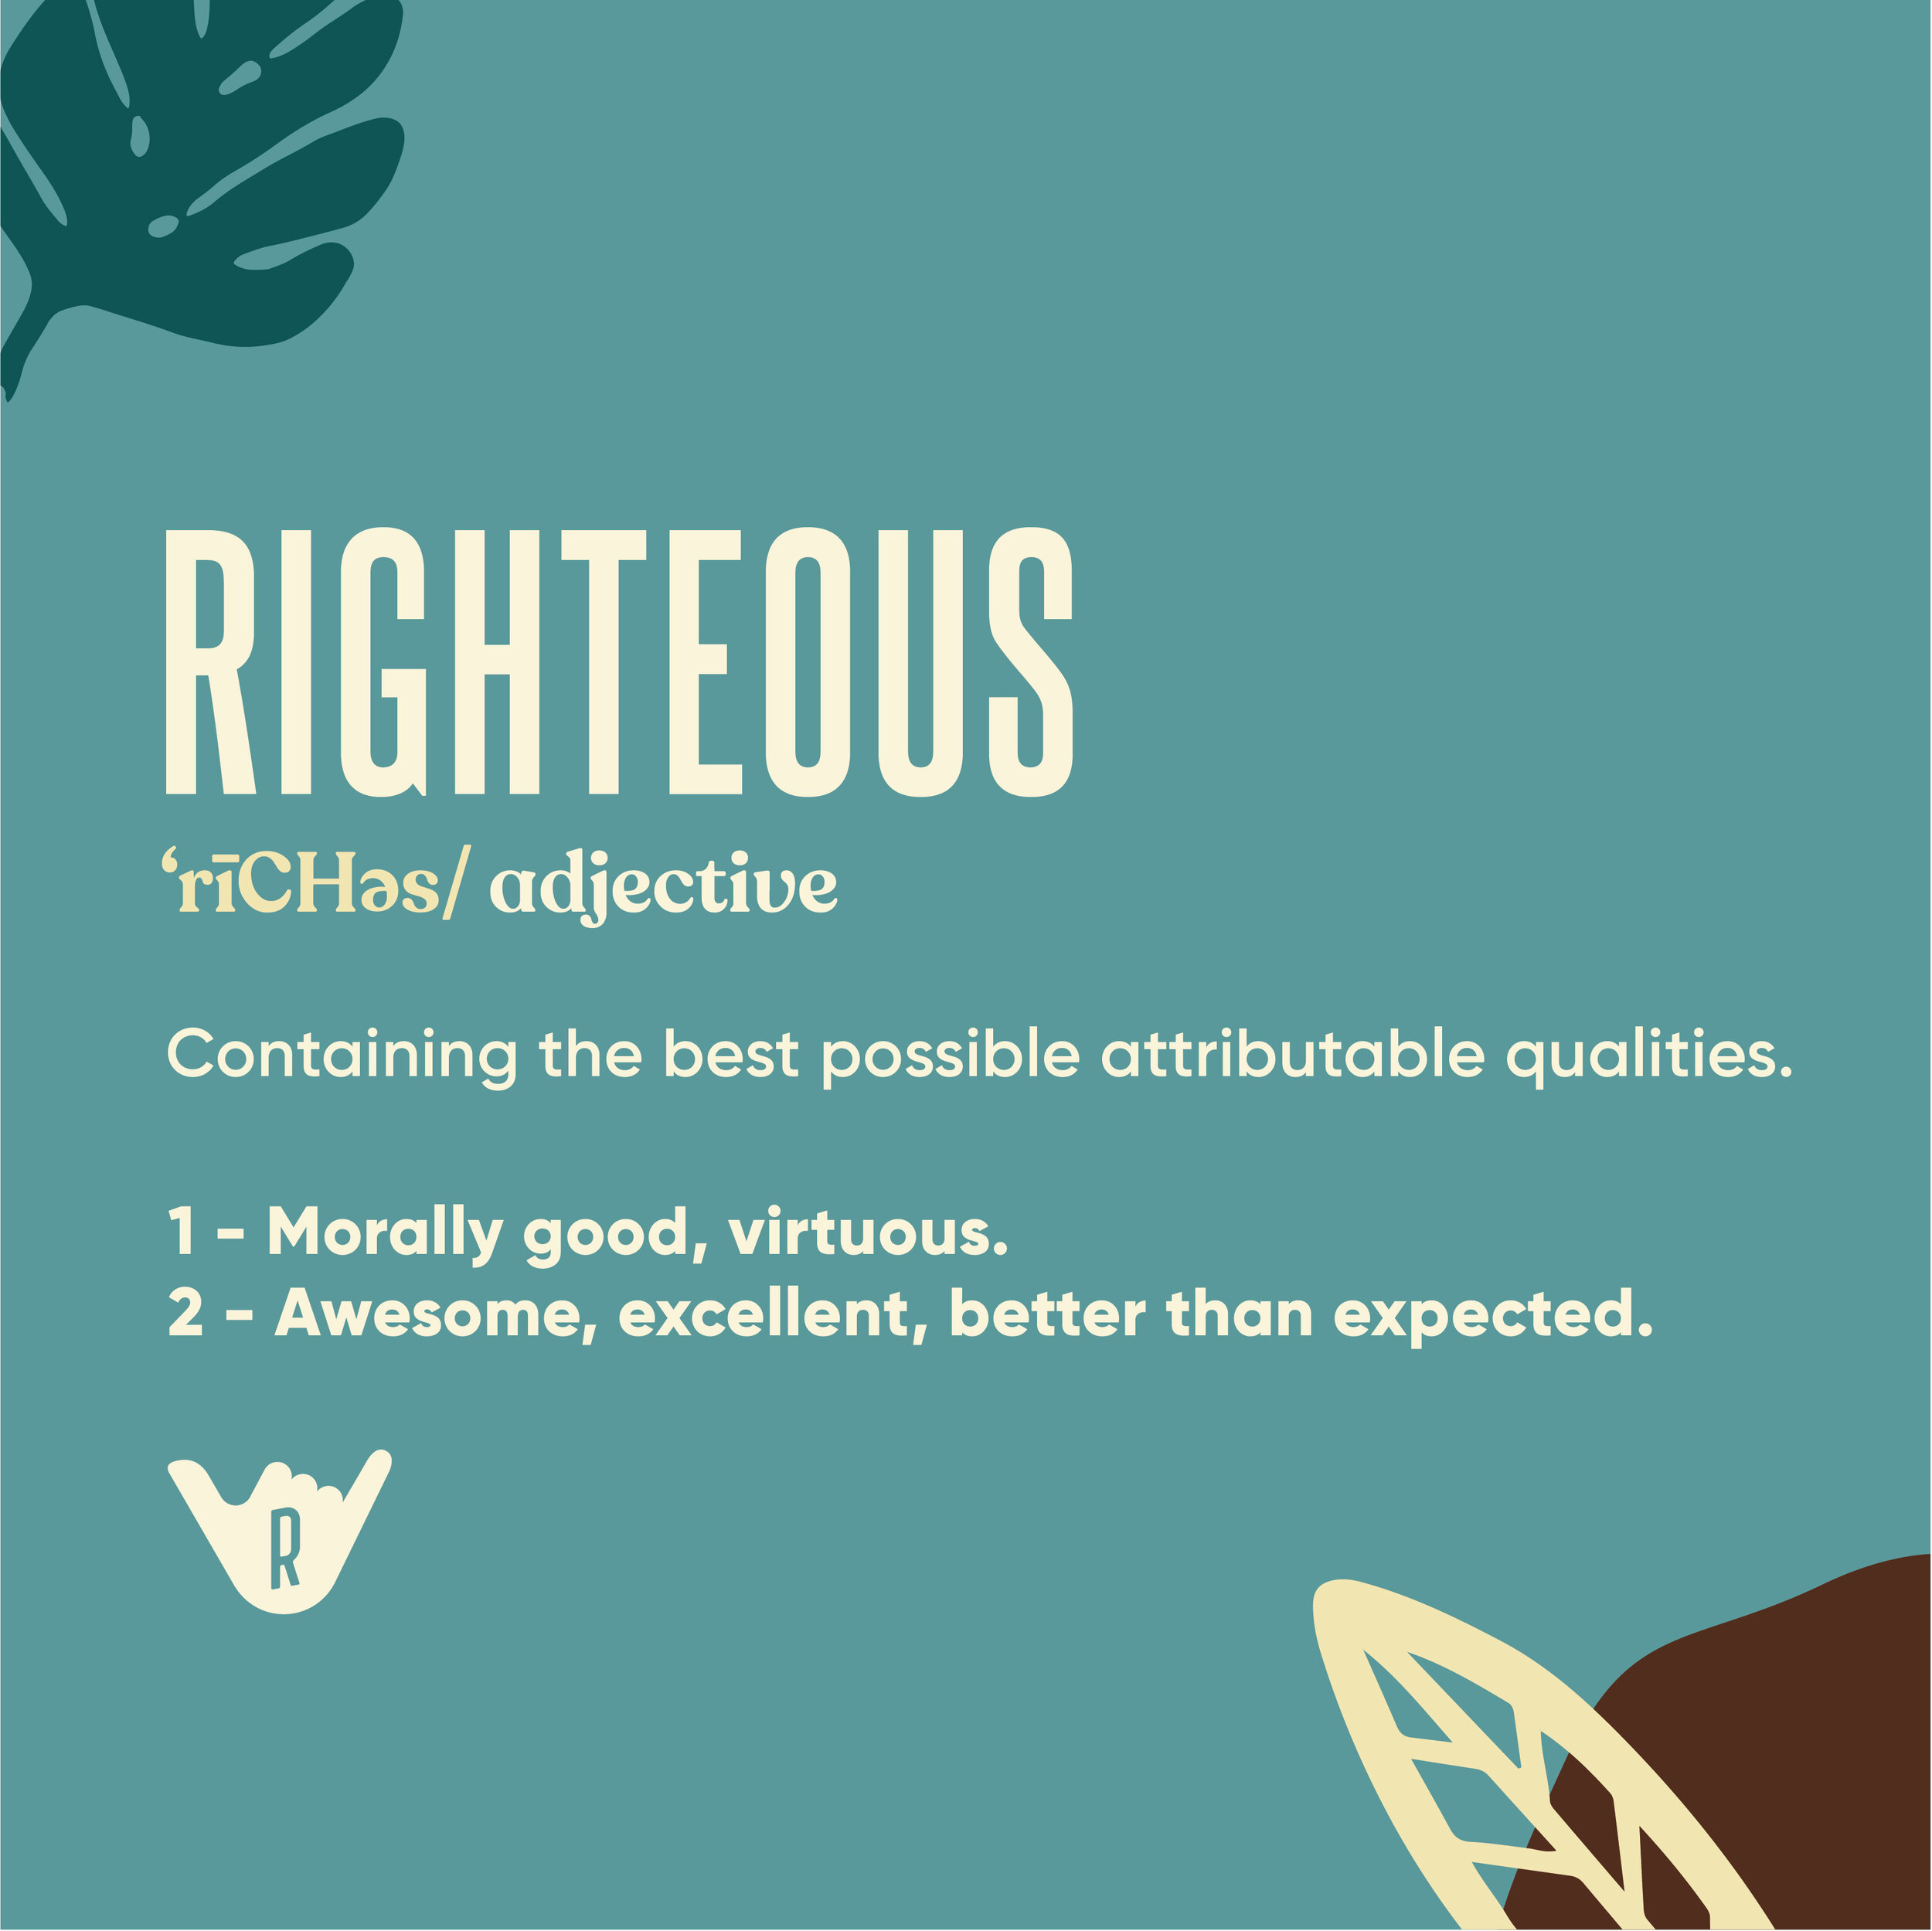 RighteousDefinition.jpg